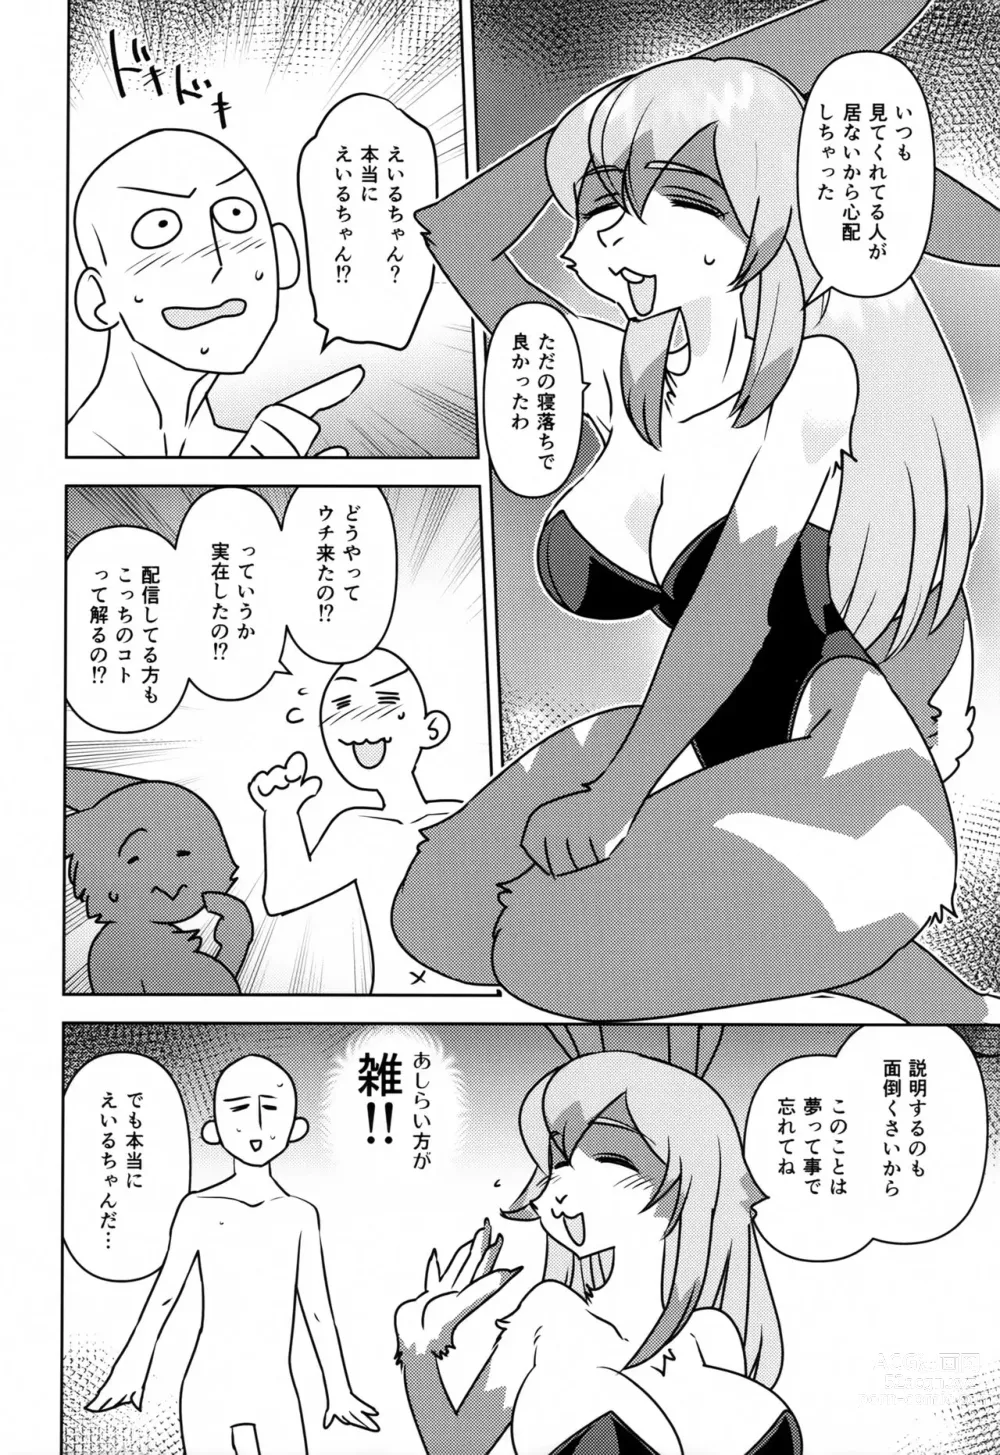 Page 5 of doujinshi Eiru-chan Kocchi Kocchi